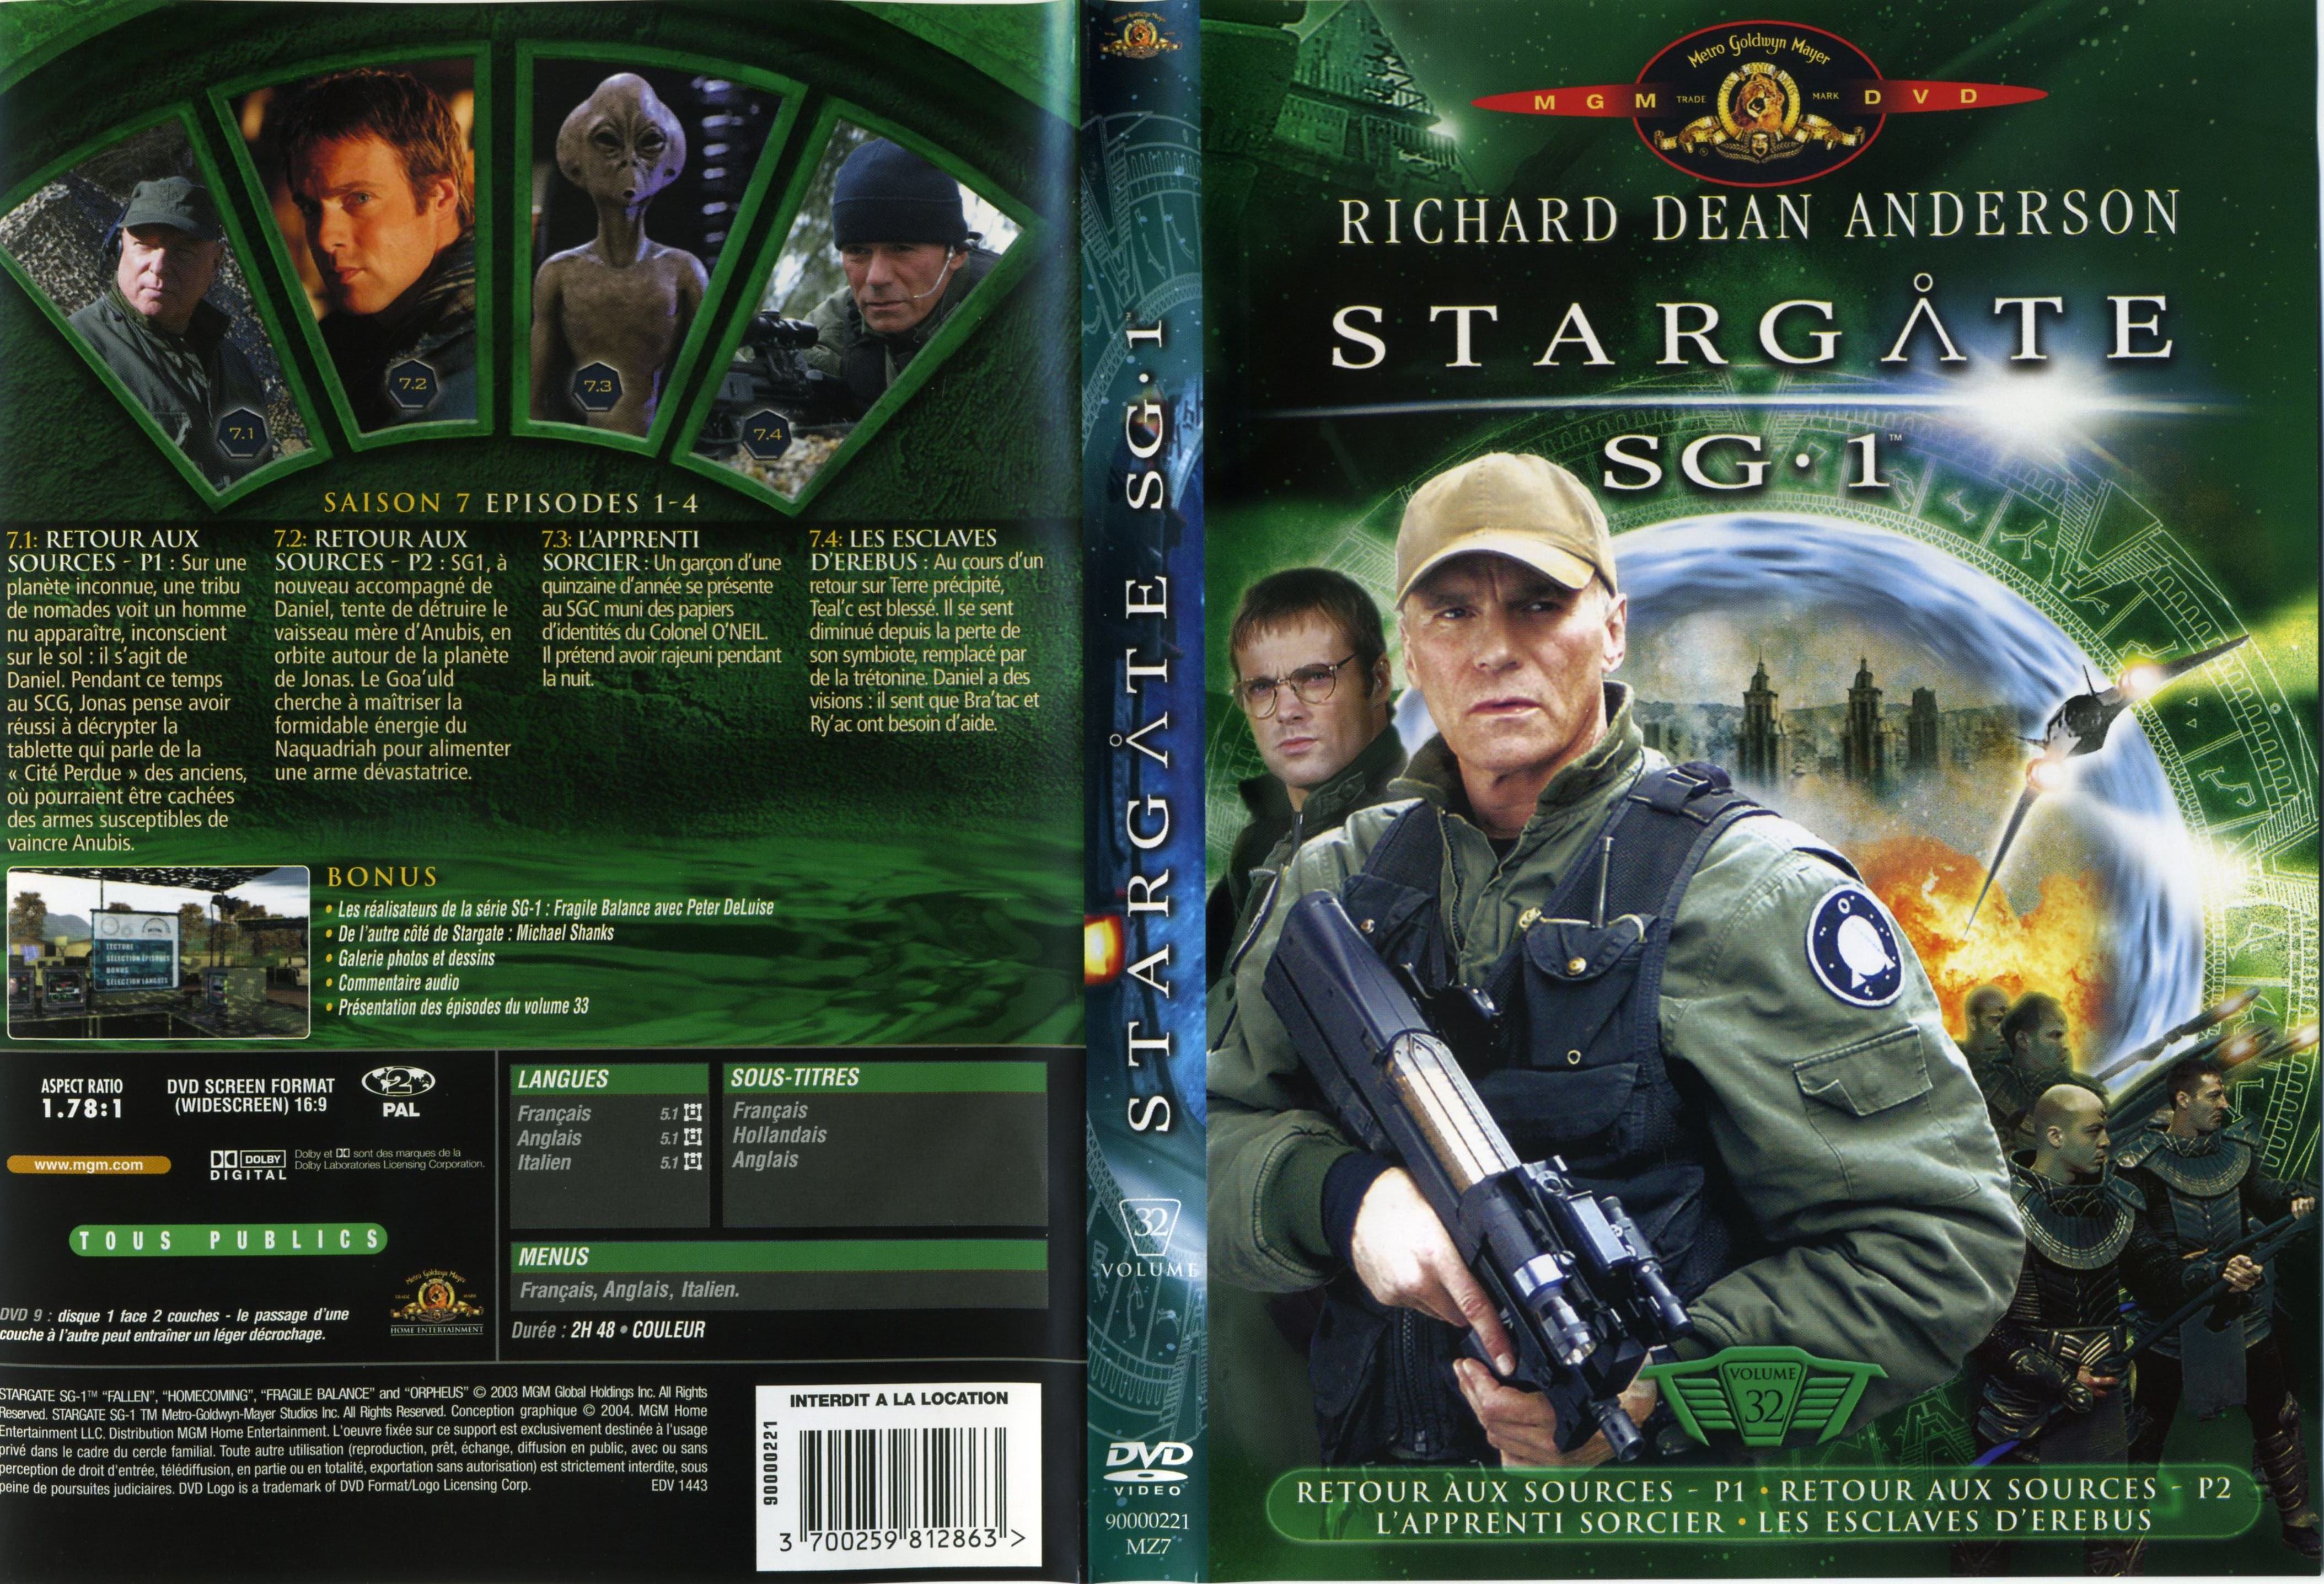 Jaquette DVD Stargate SG1 vol 32